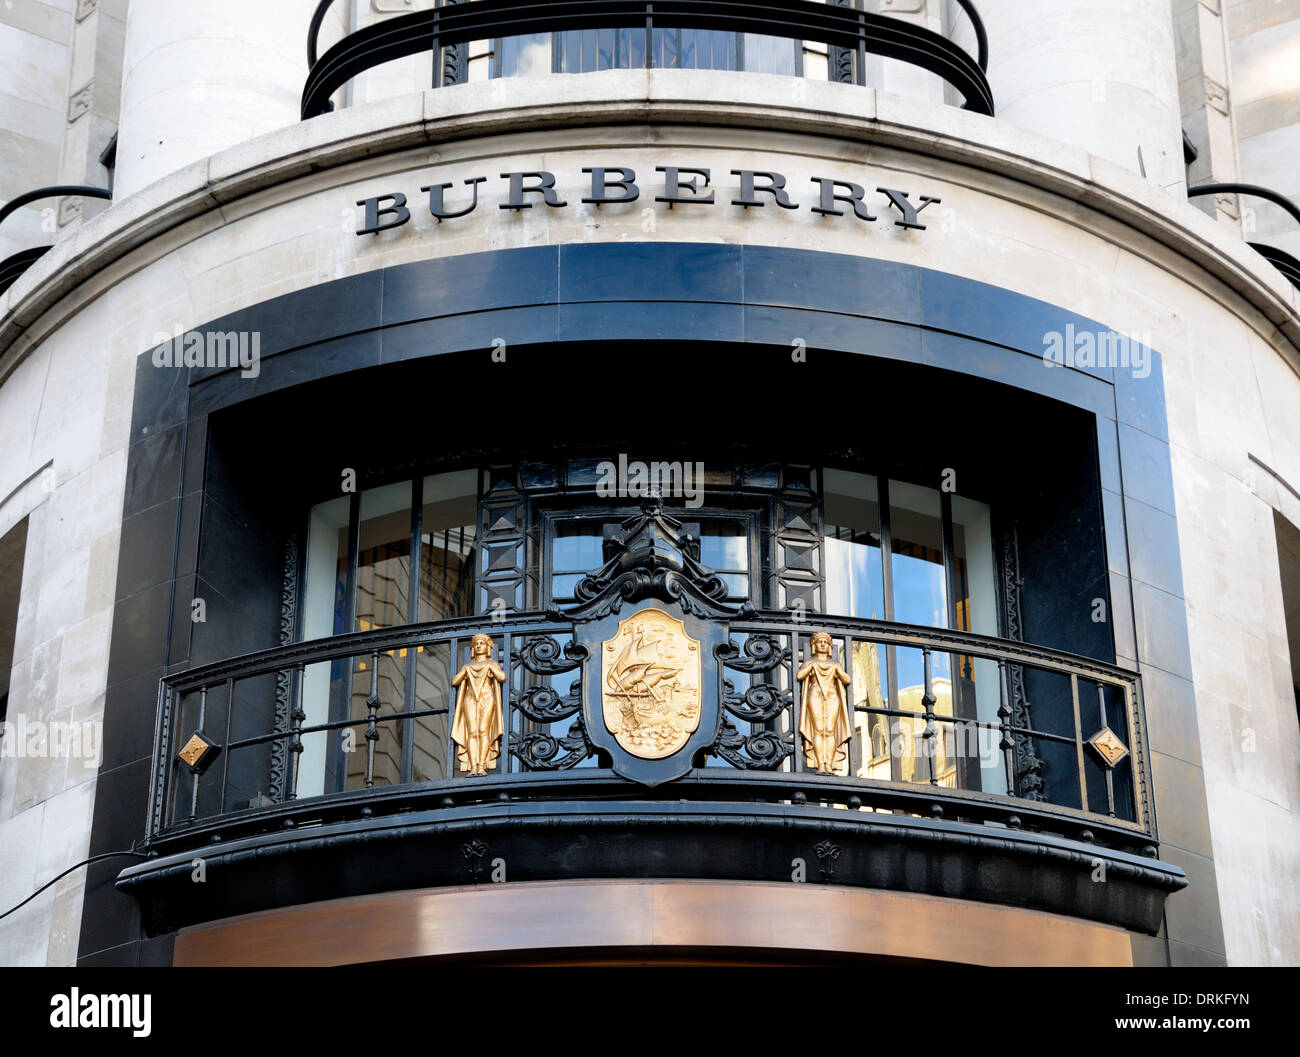 burberry shop london